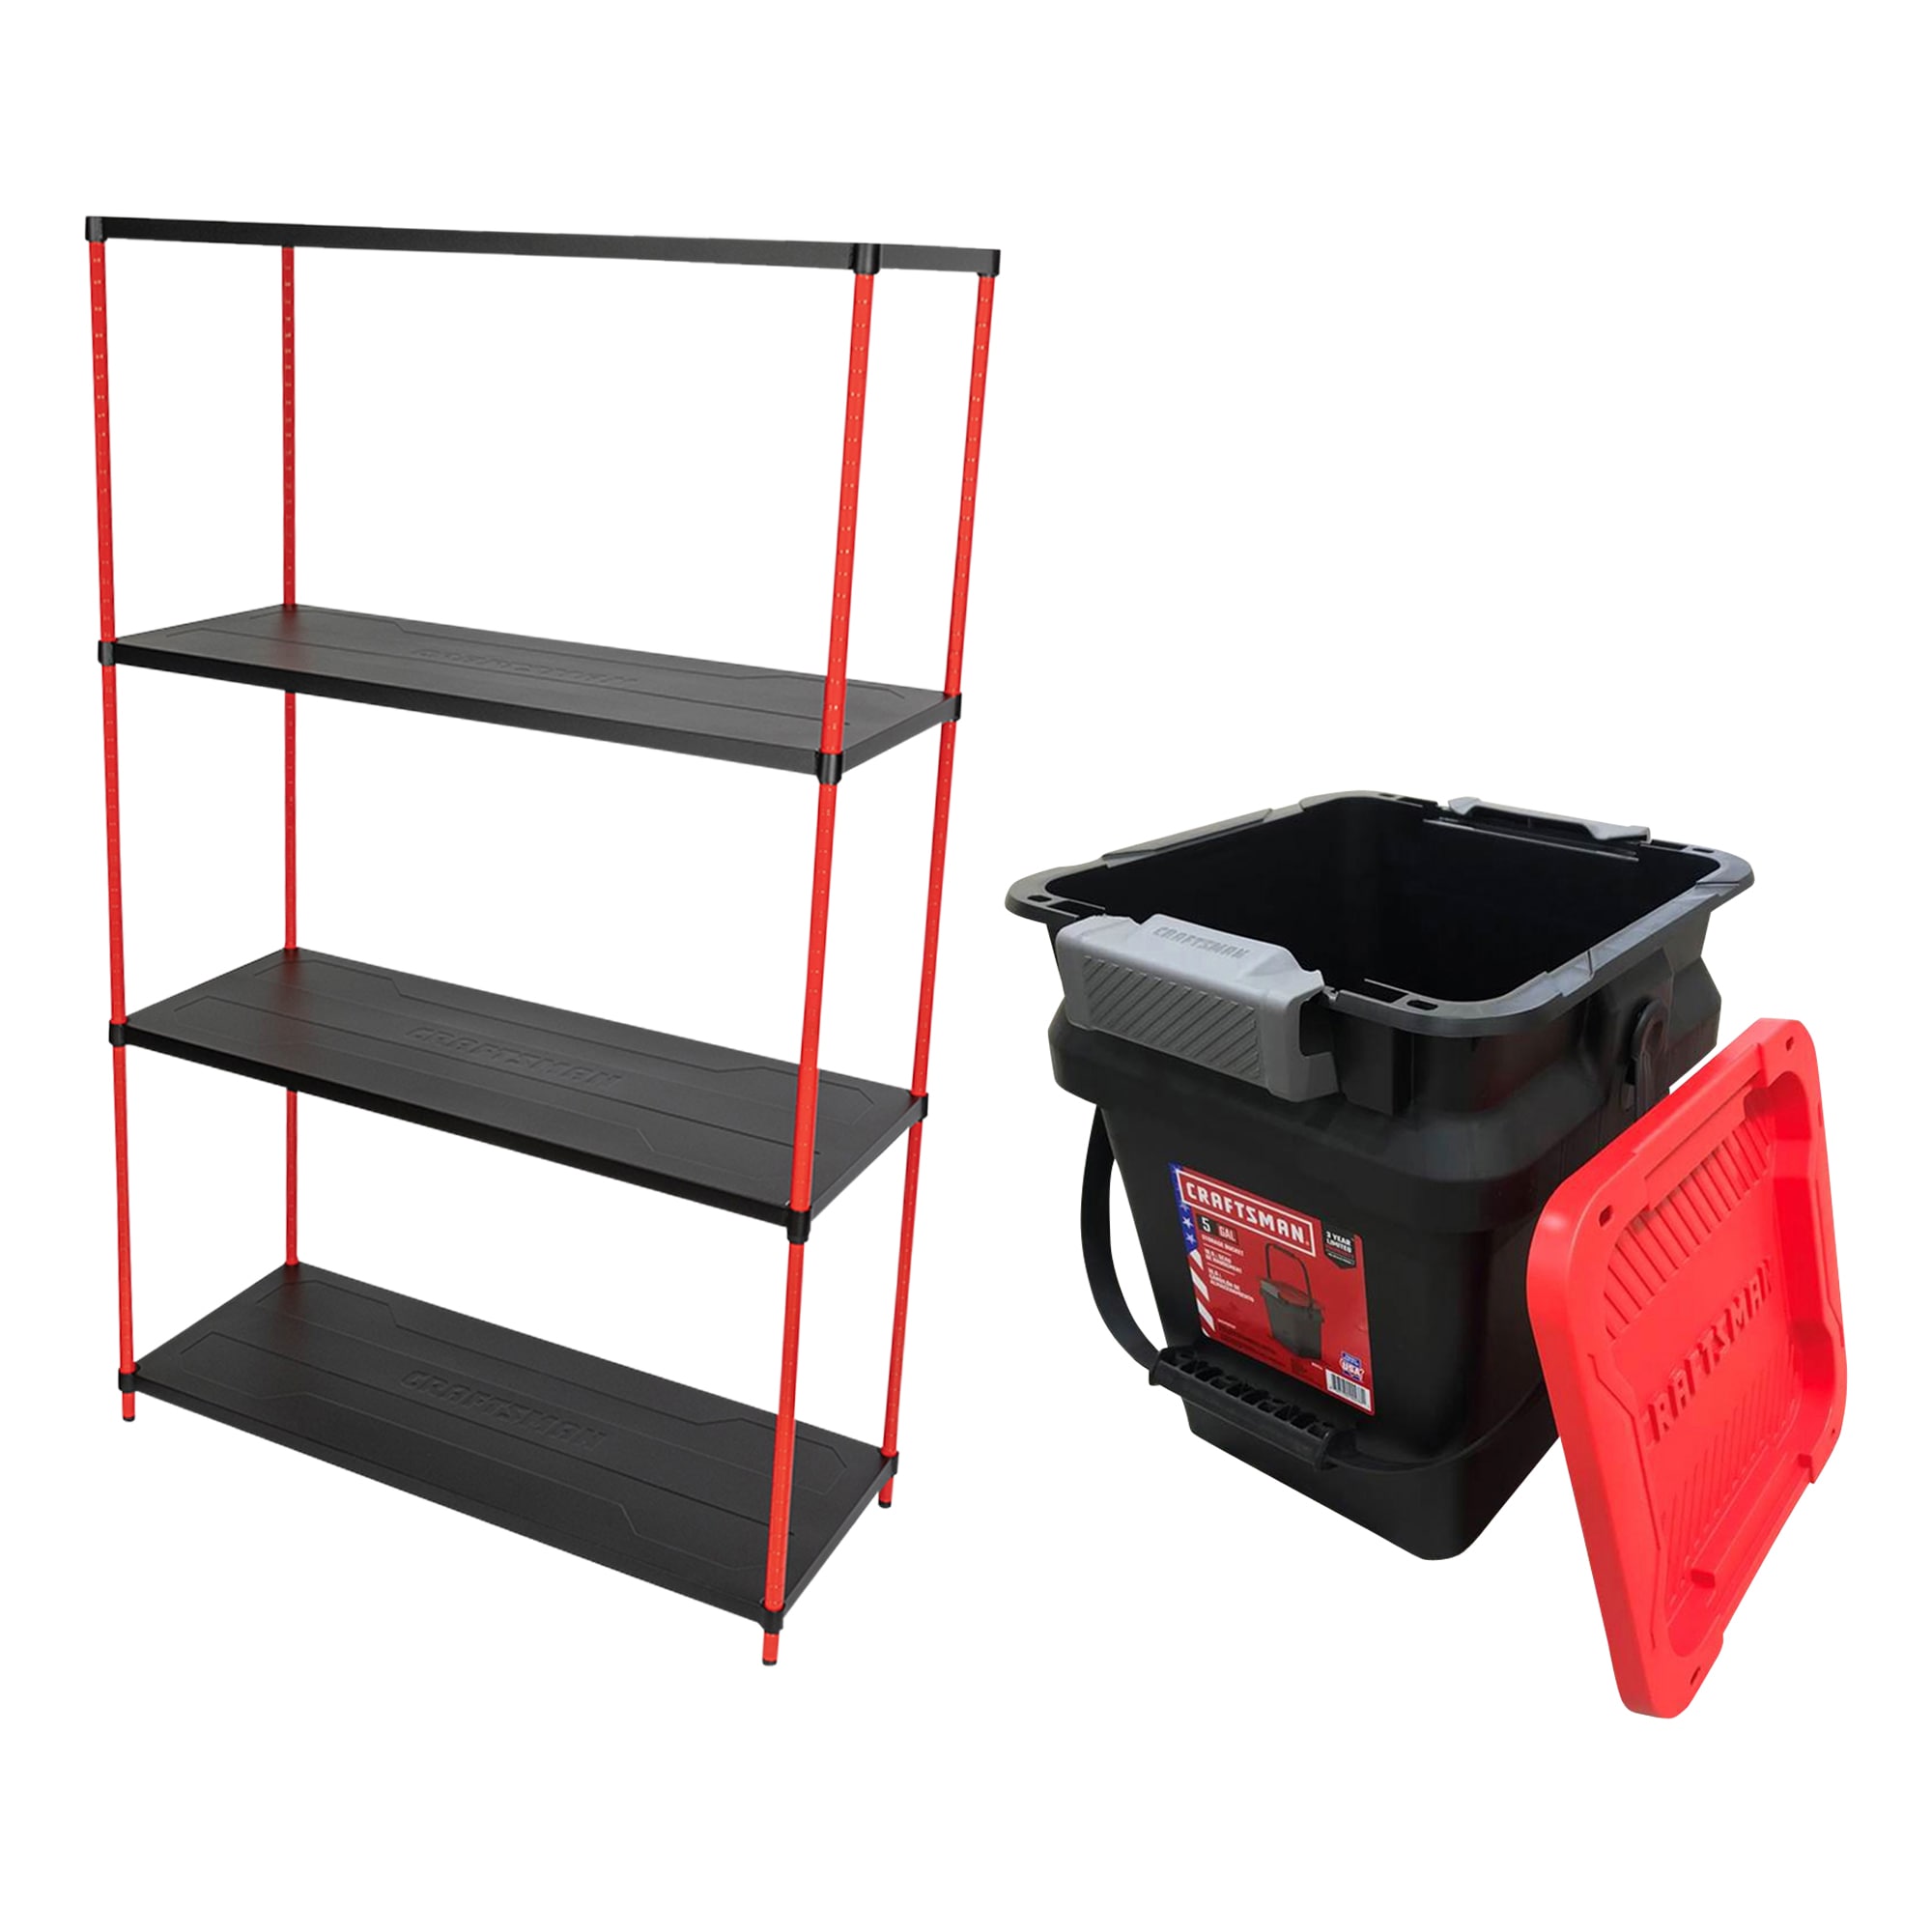 RW Clean Black Plastic Heavy-Duty Janitor Cart - 3 Shelves, 20 gal Nylon  Bag, Hinged Lid - 44 1/4 x 20 x 37 3/4 - 1 count box